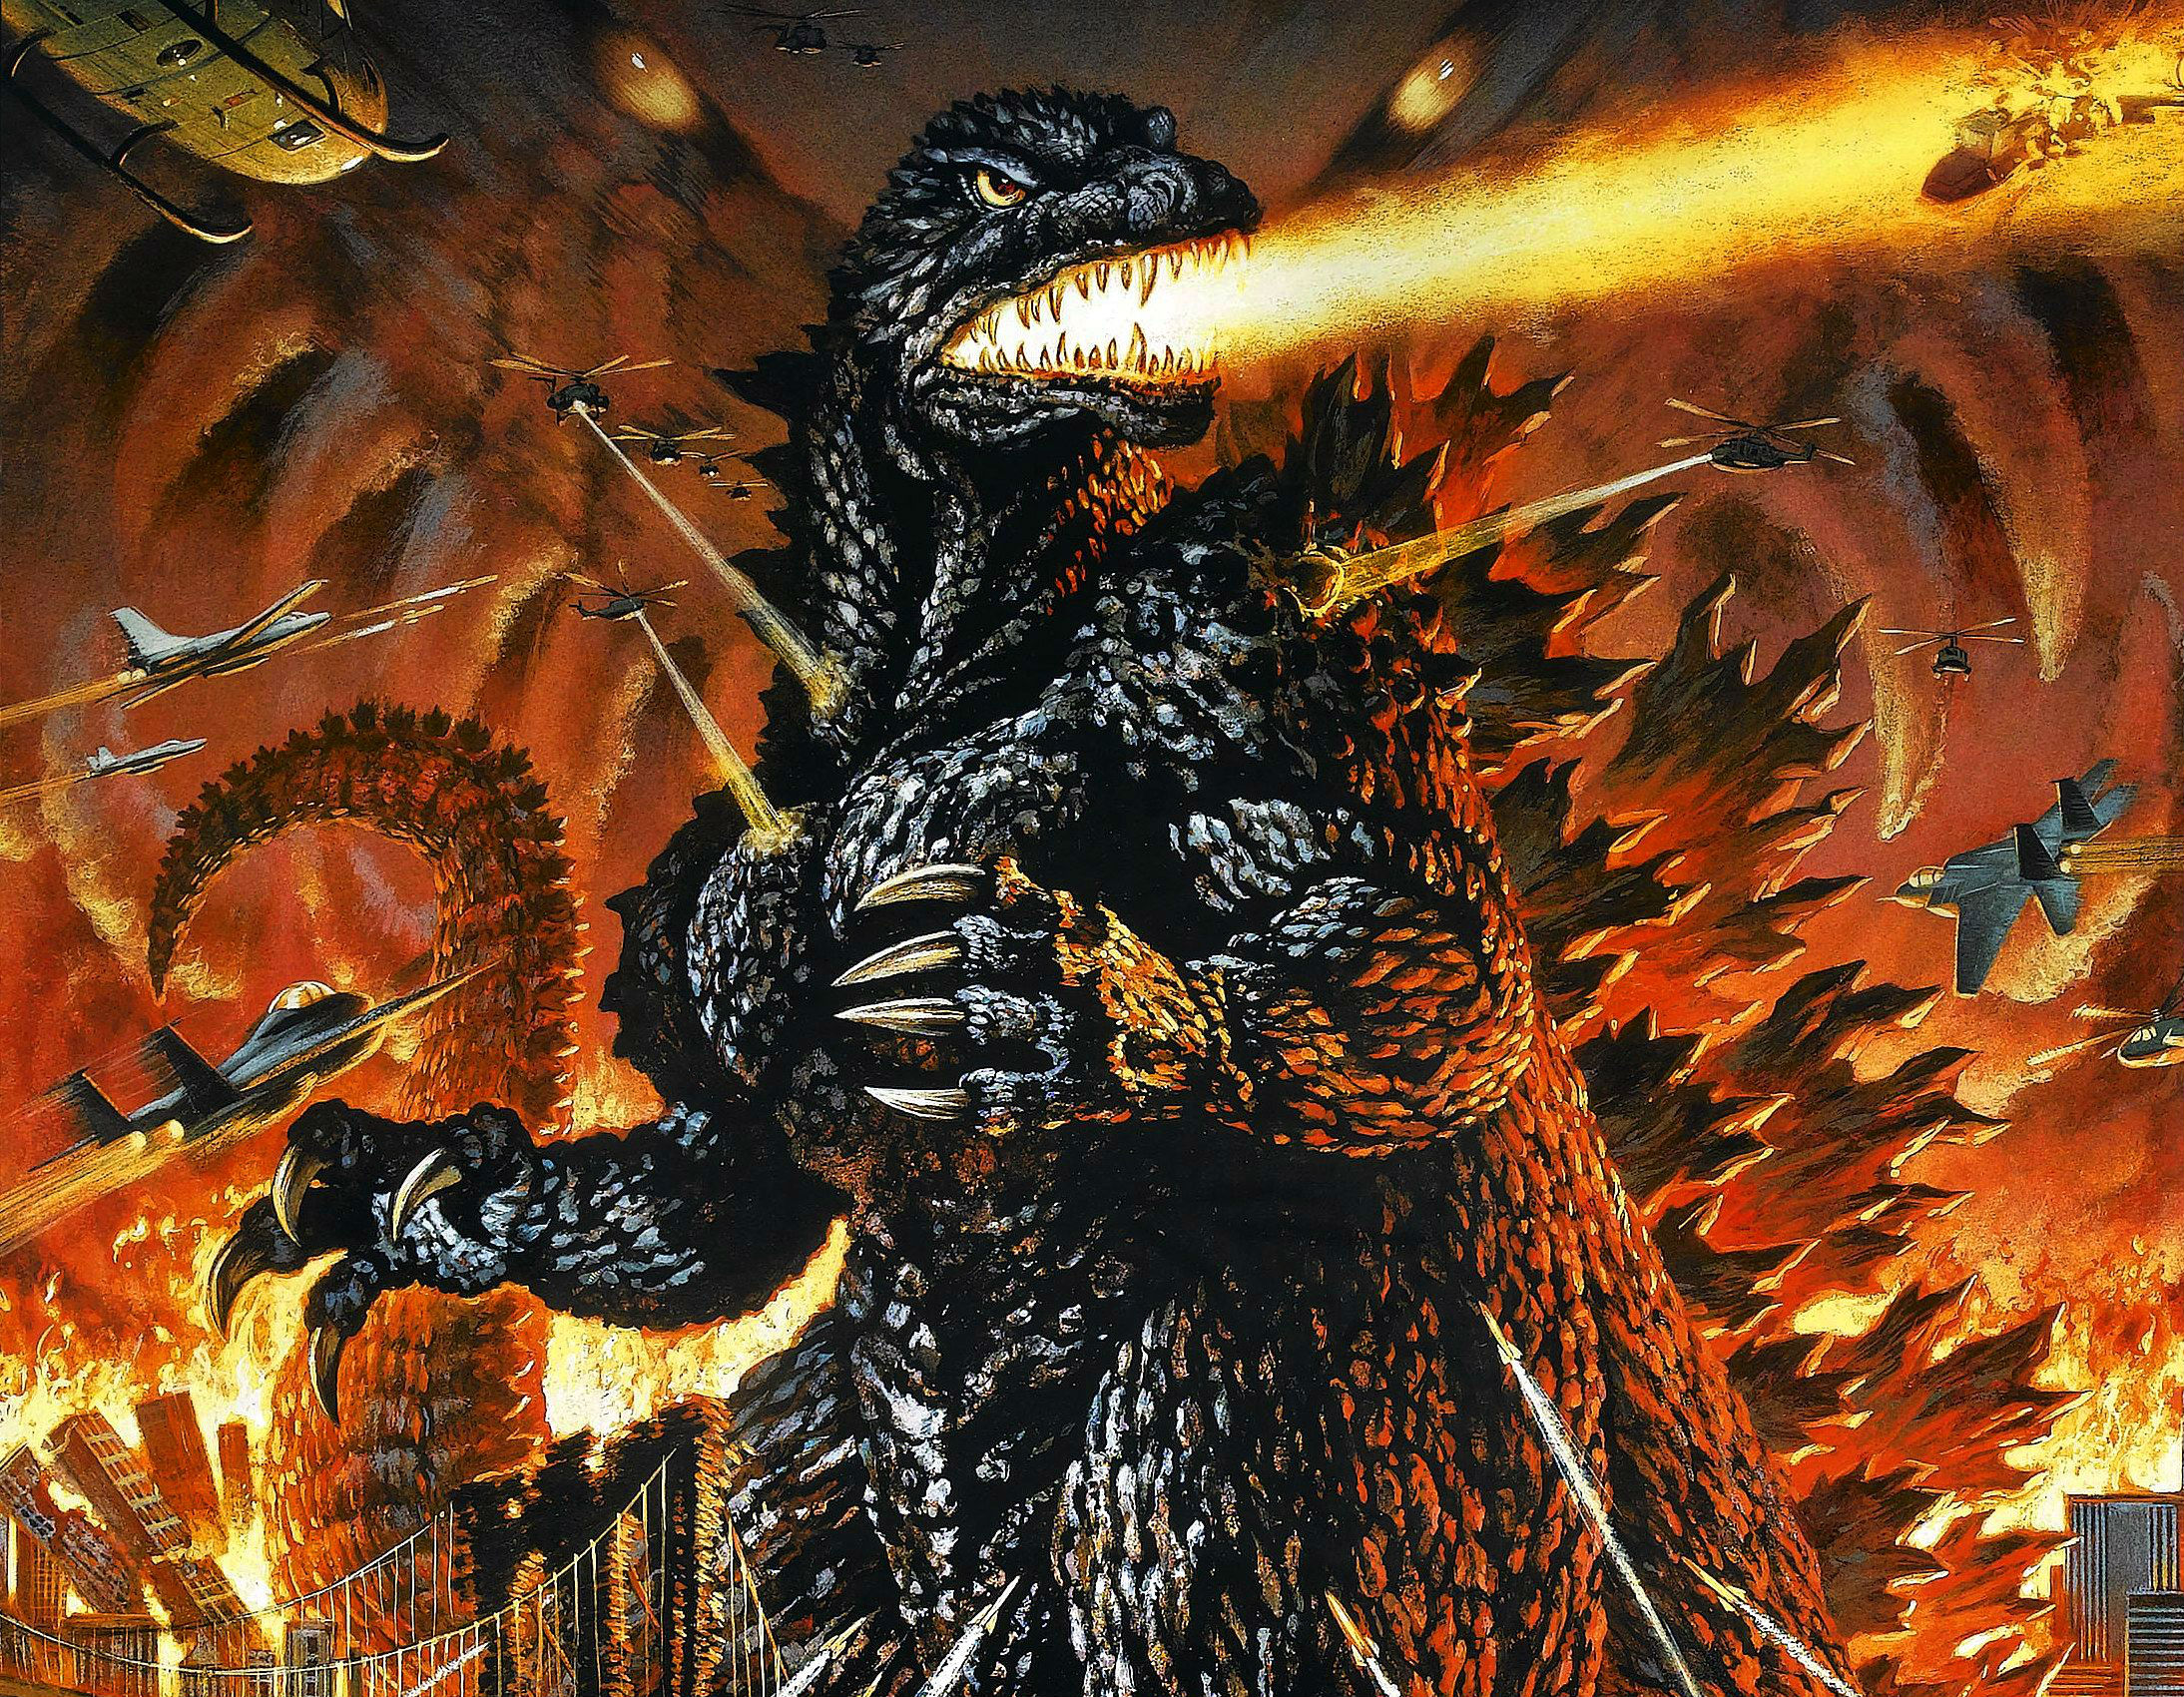 GODZILLA sci fi fantasy action dinosaur apocalyptic monster f